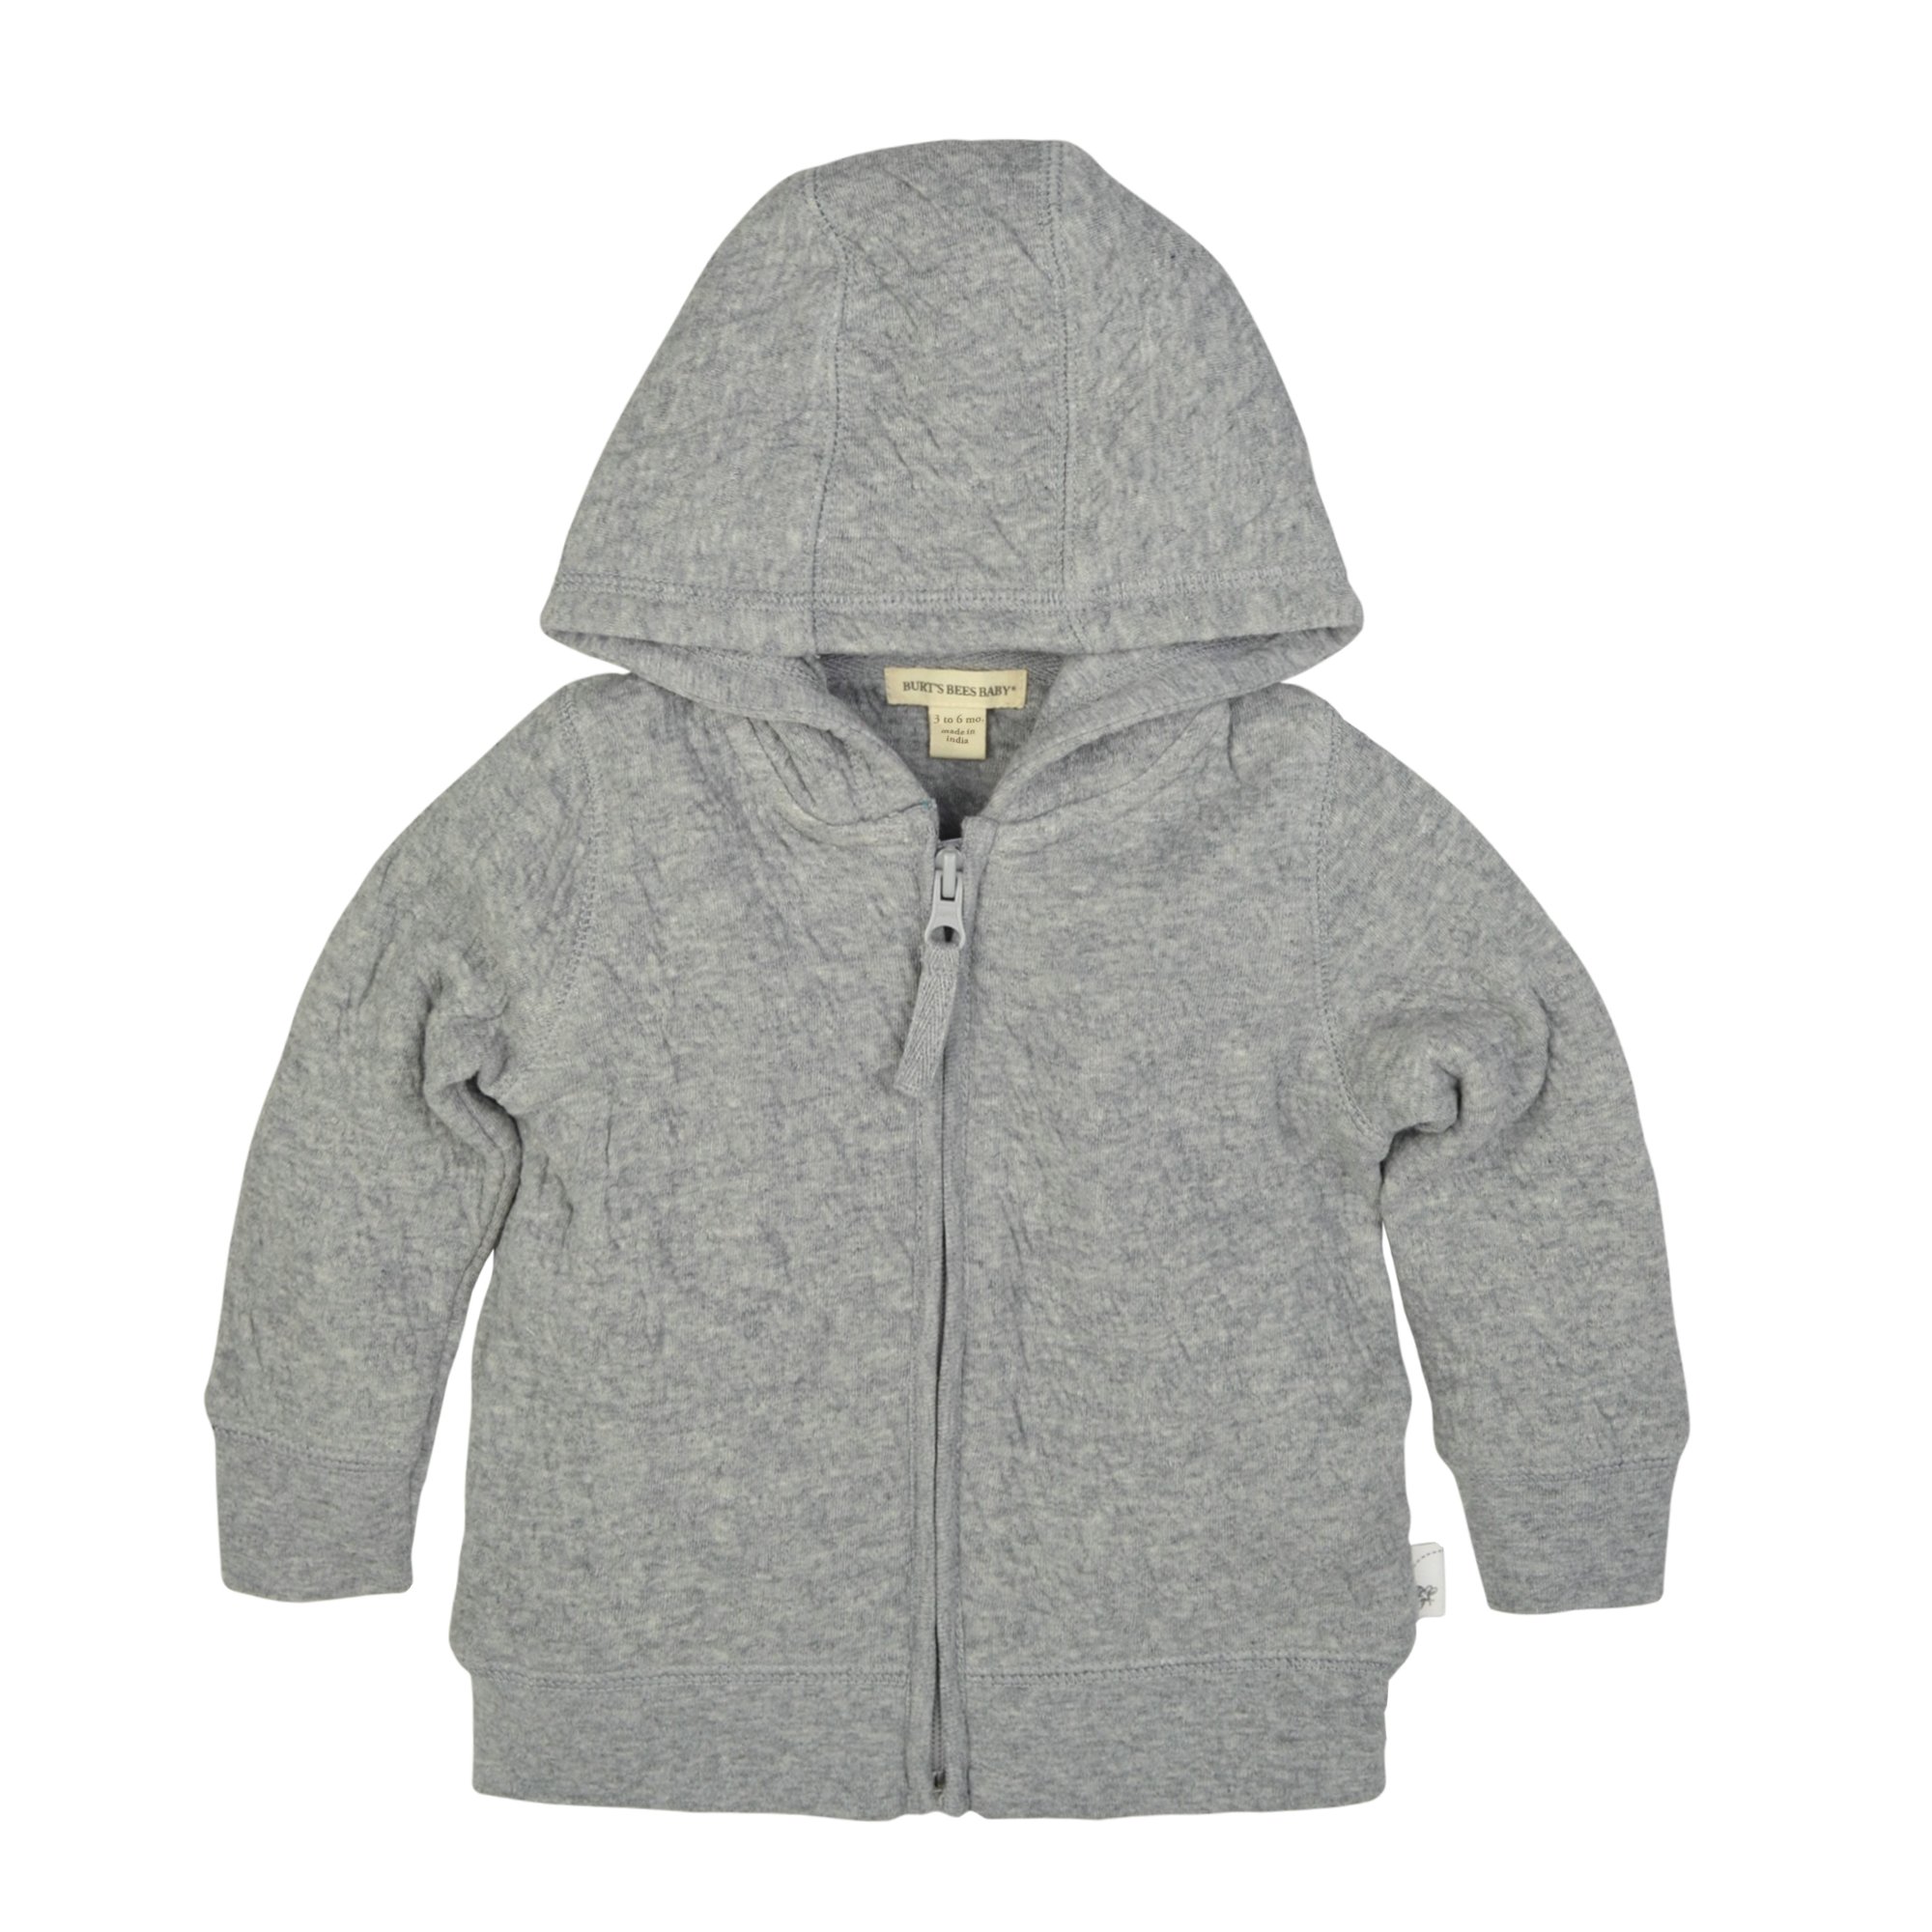 Burt's Bees Baby Baby Sweatshirts, Lightweight Zip-up Jackets & Hooded Coats, Organic Cotton